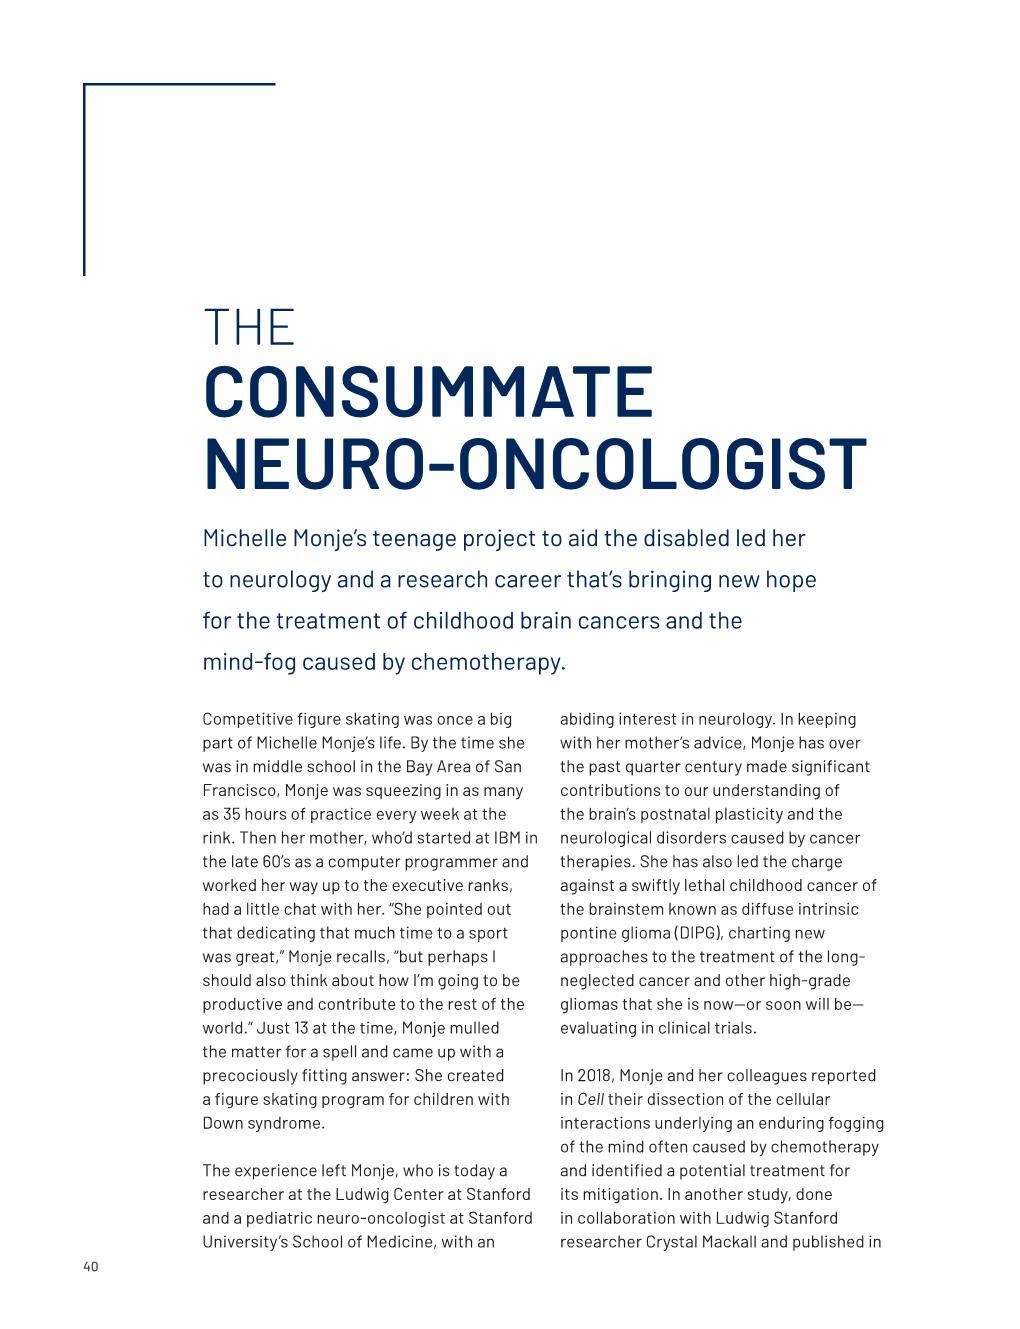 Consummate Neuro-Oncologist